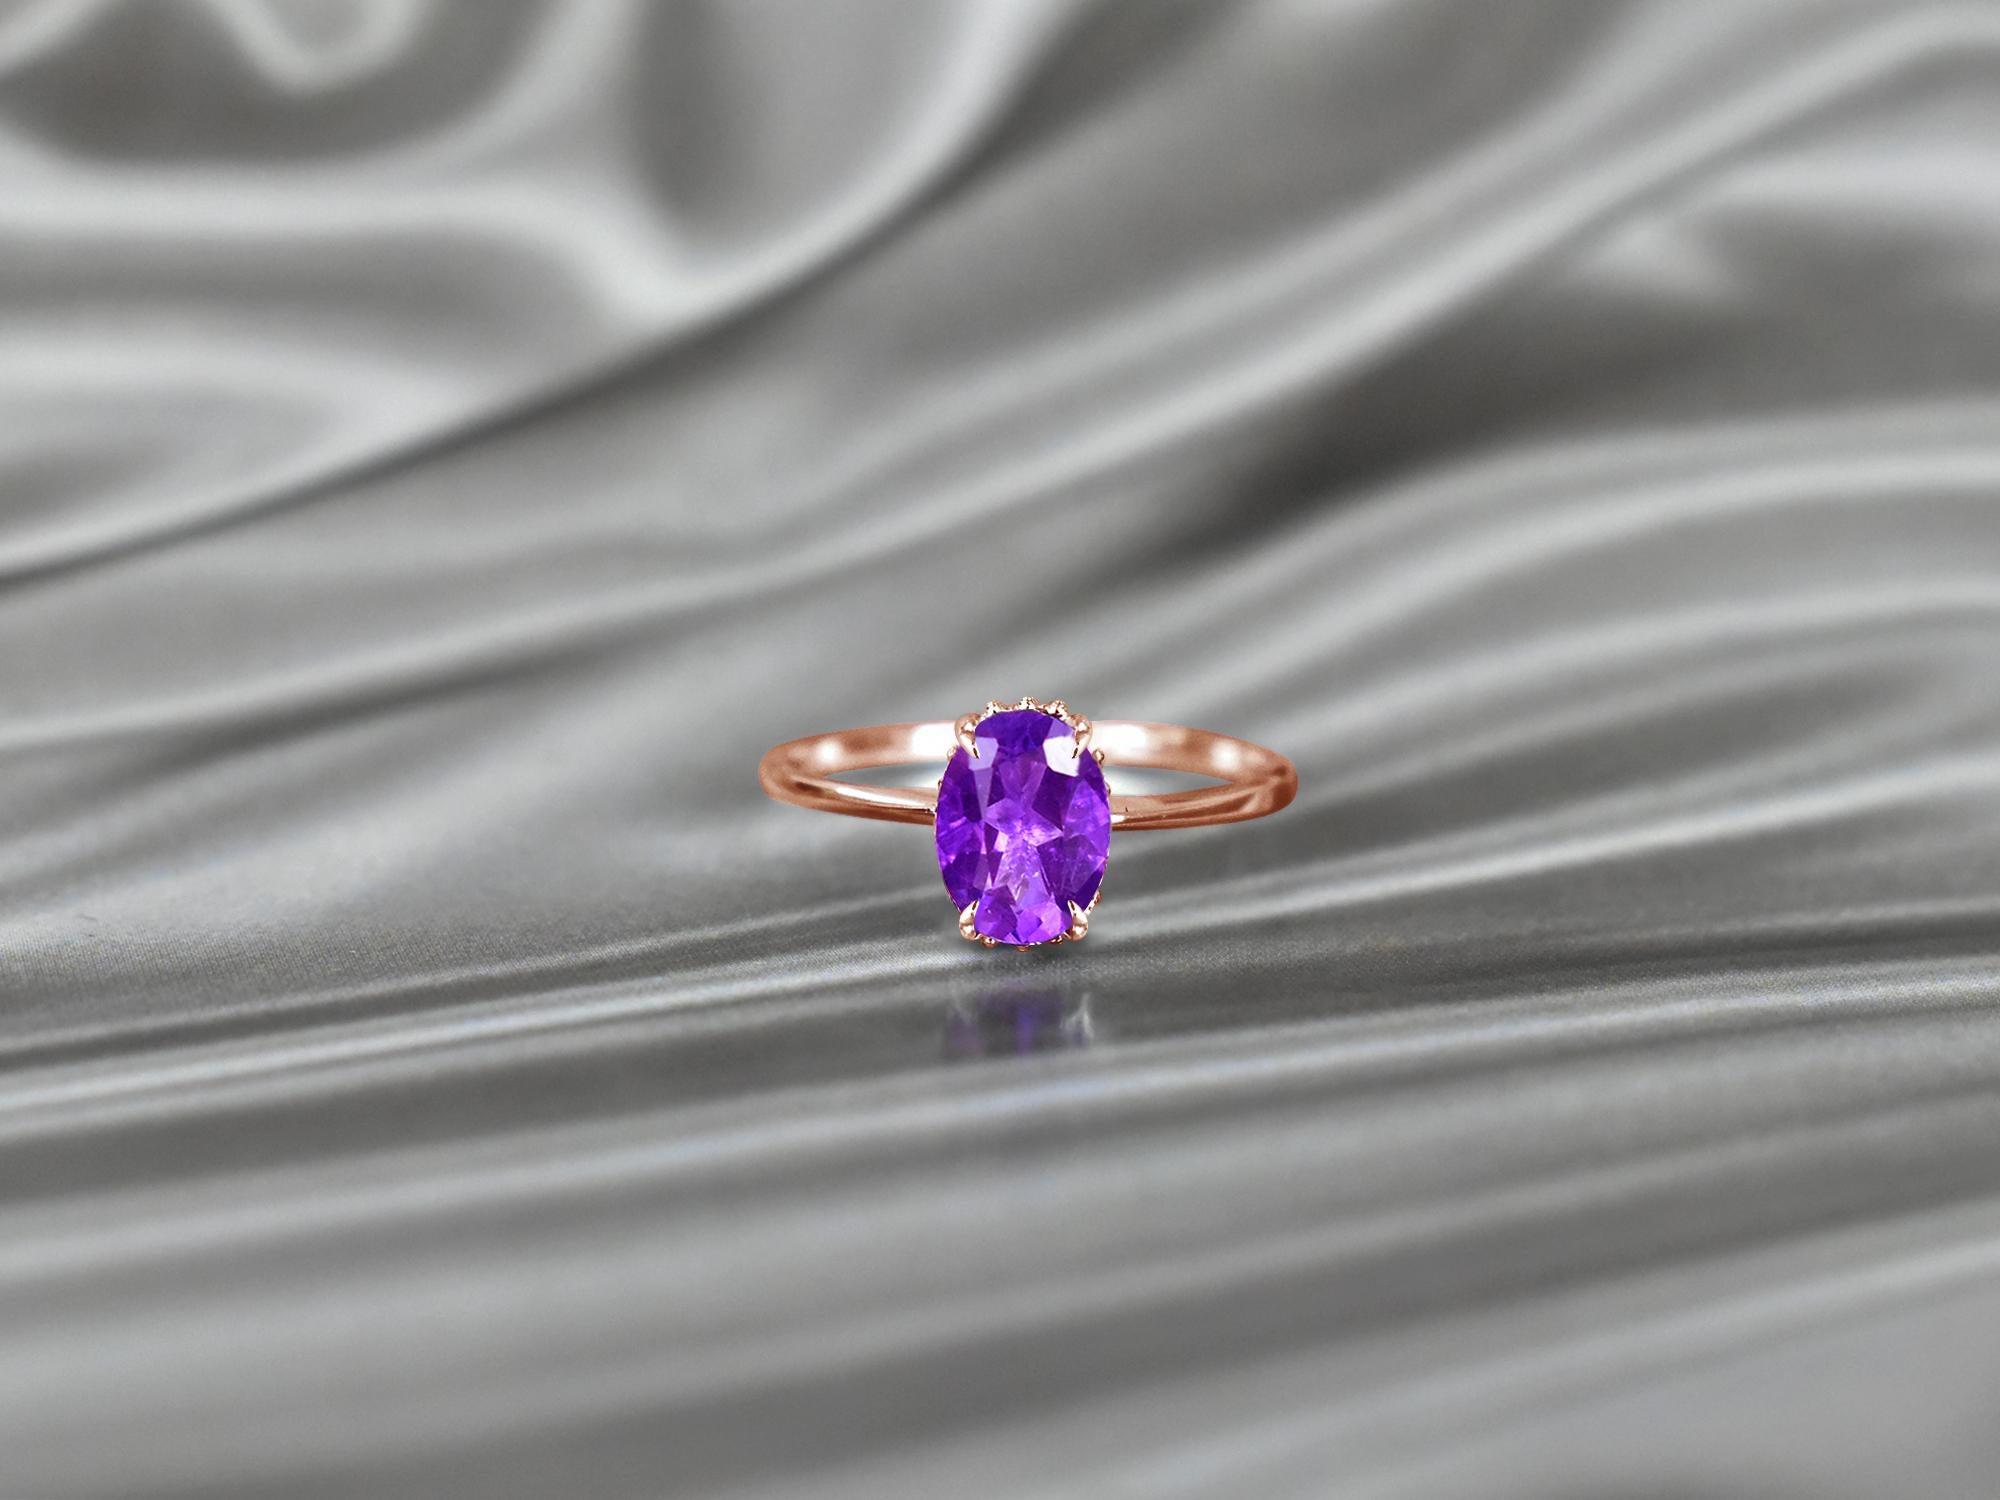 For Sale:  14k Gold Oval Gemstone 8x6 mm Oval Cut Gemstone Ring Gemstone Engagement Ring 2